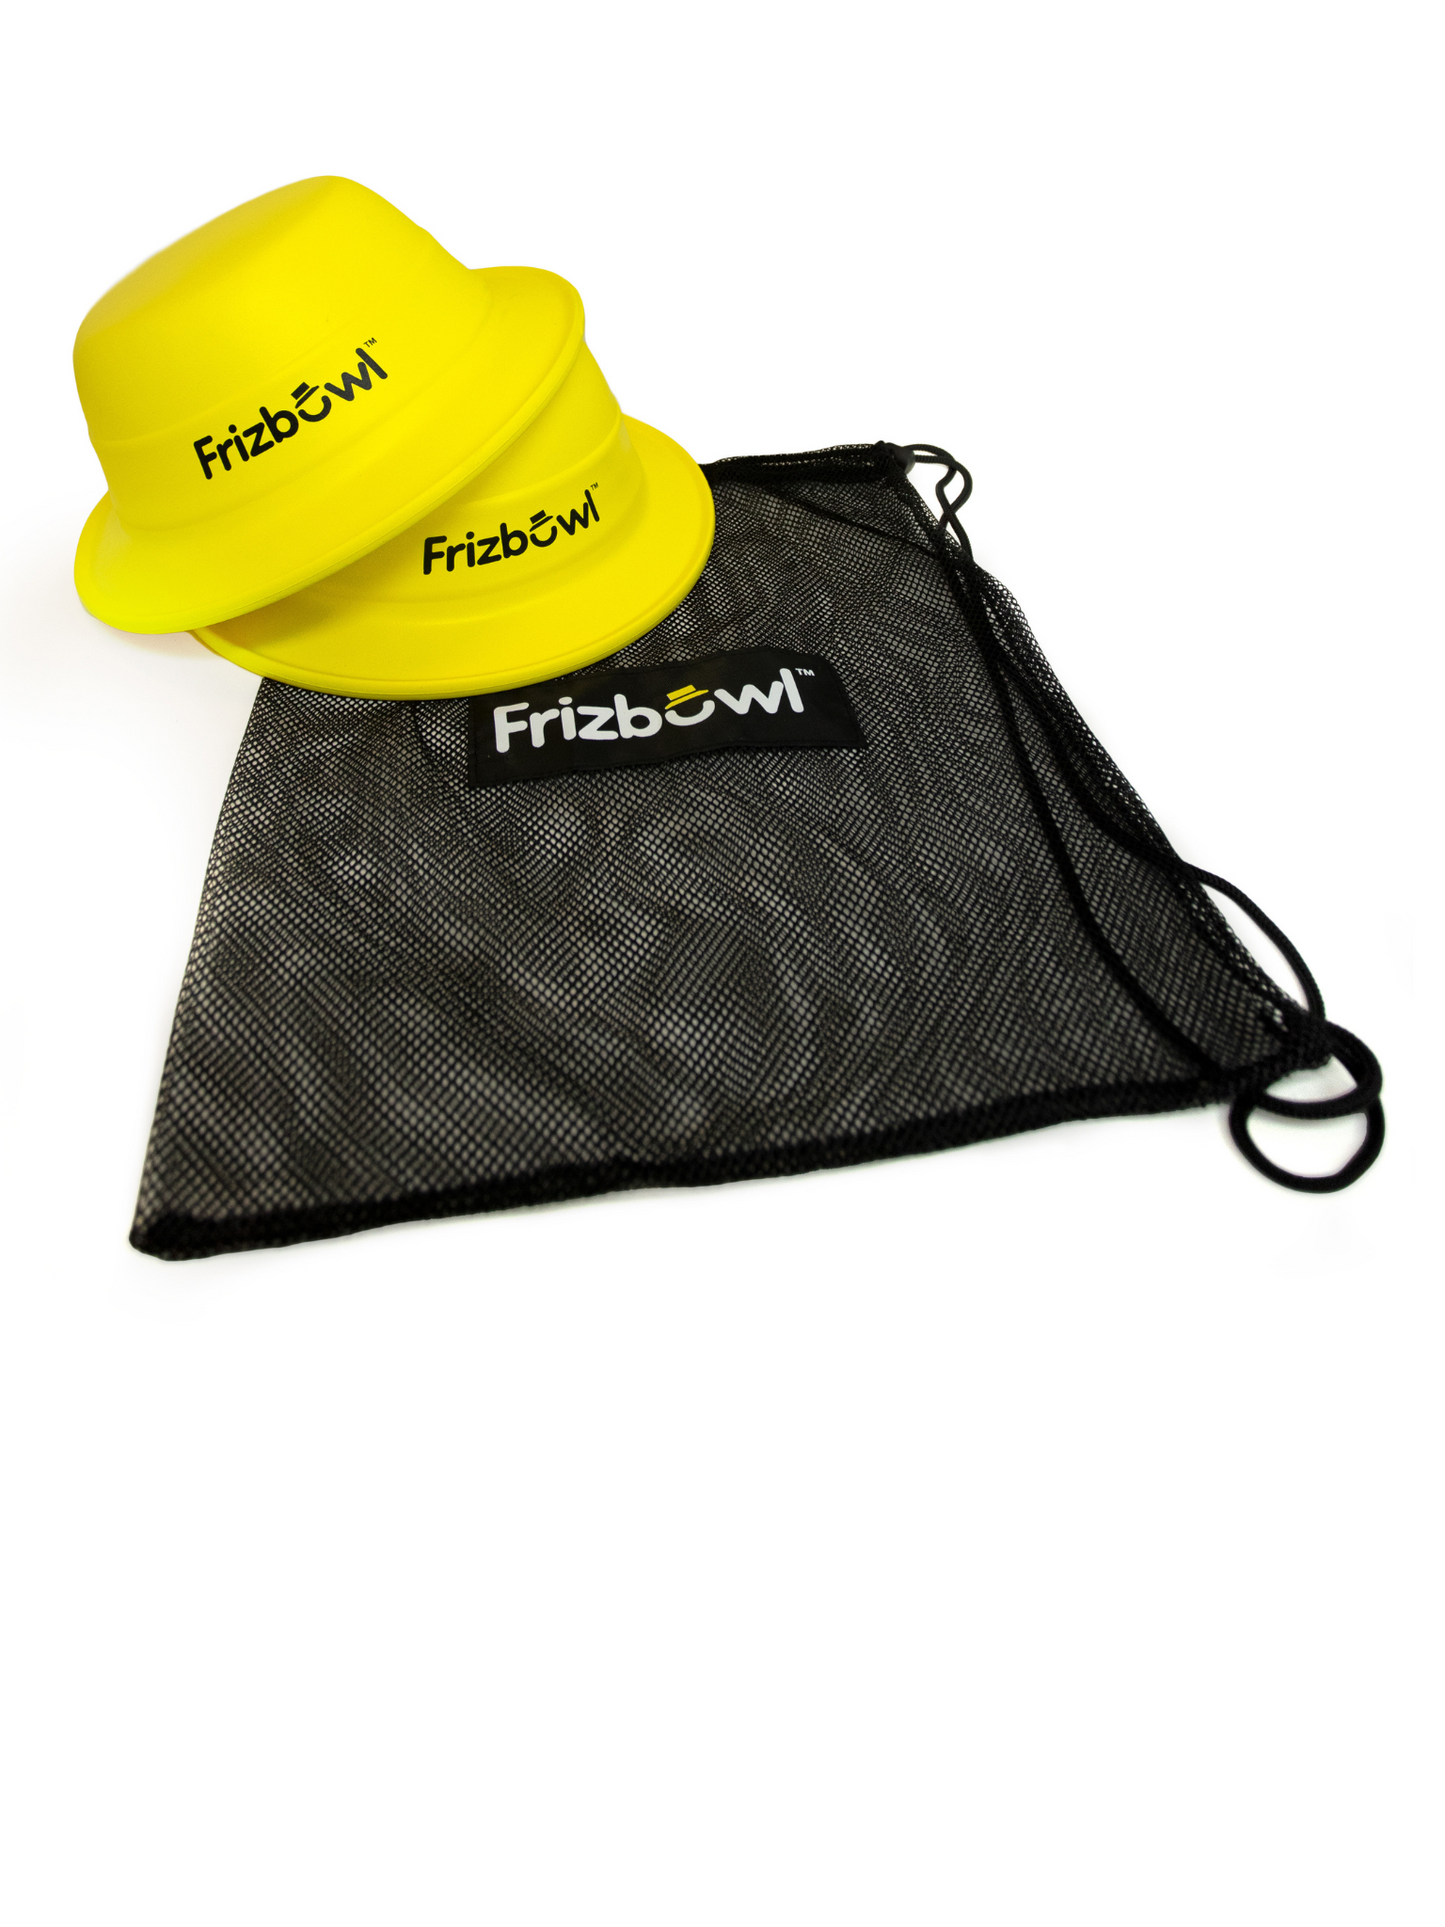 Frizbowl - Game Set